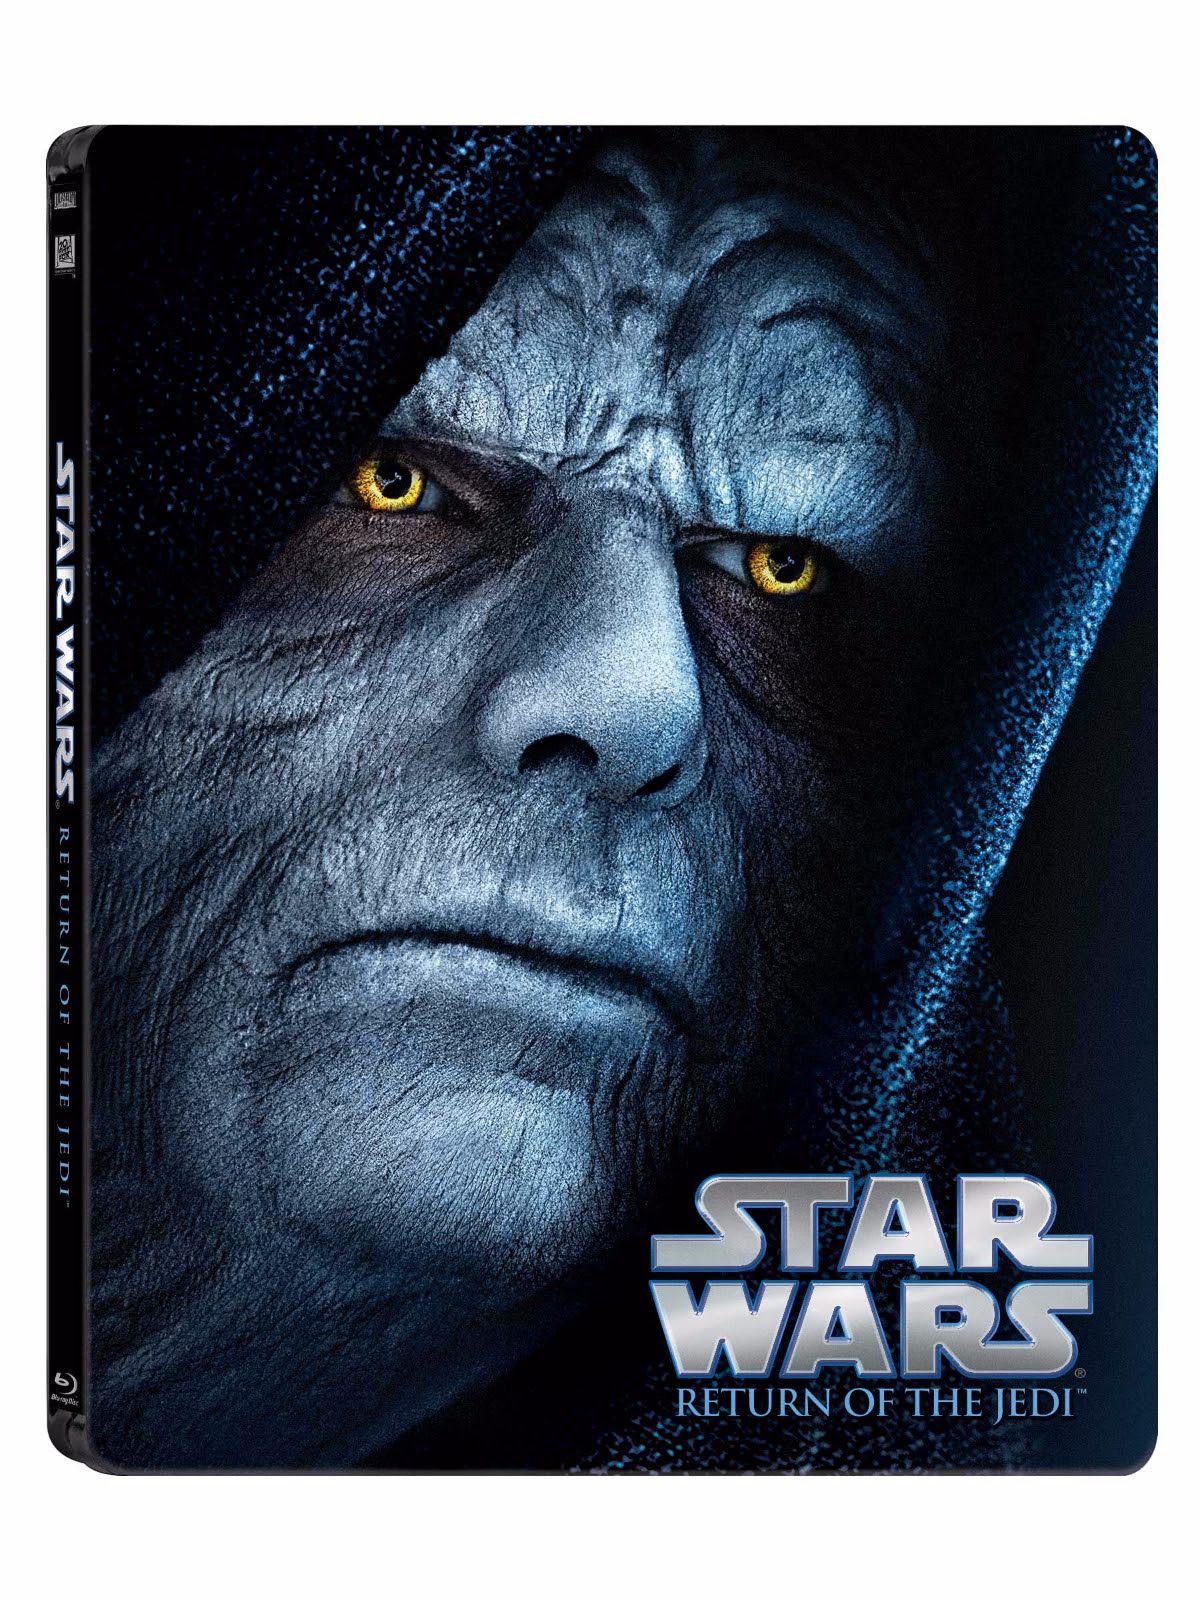 Star Wars Blu Ray 68